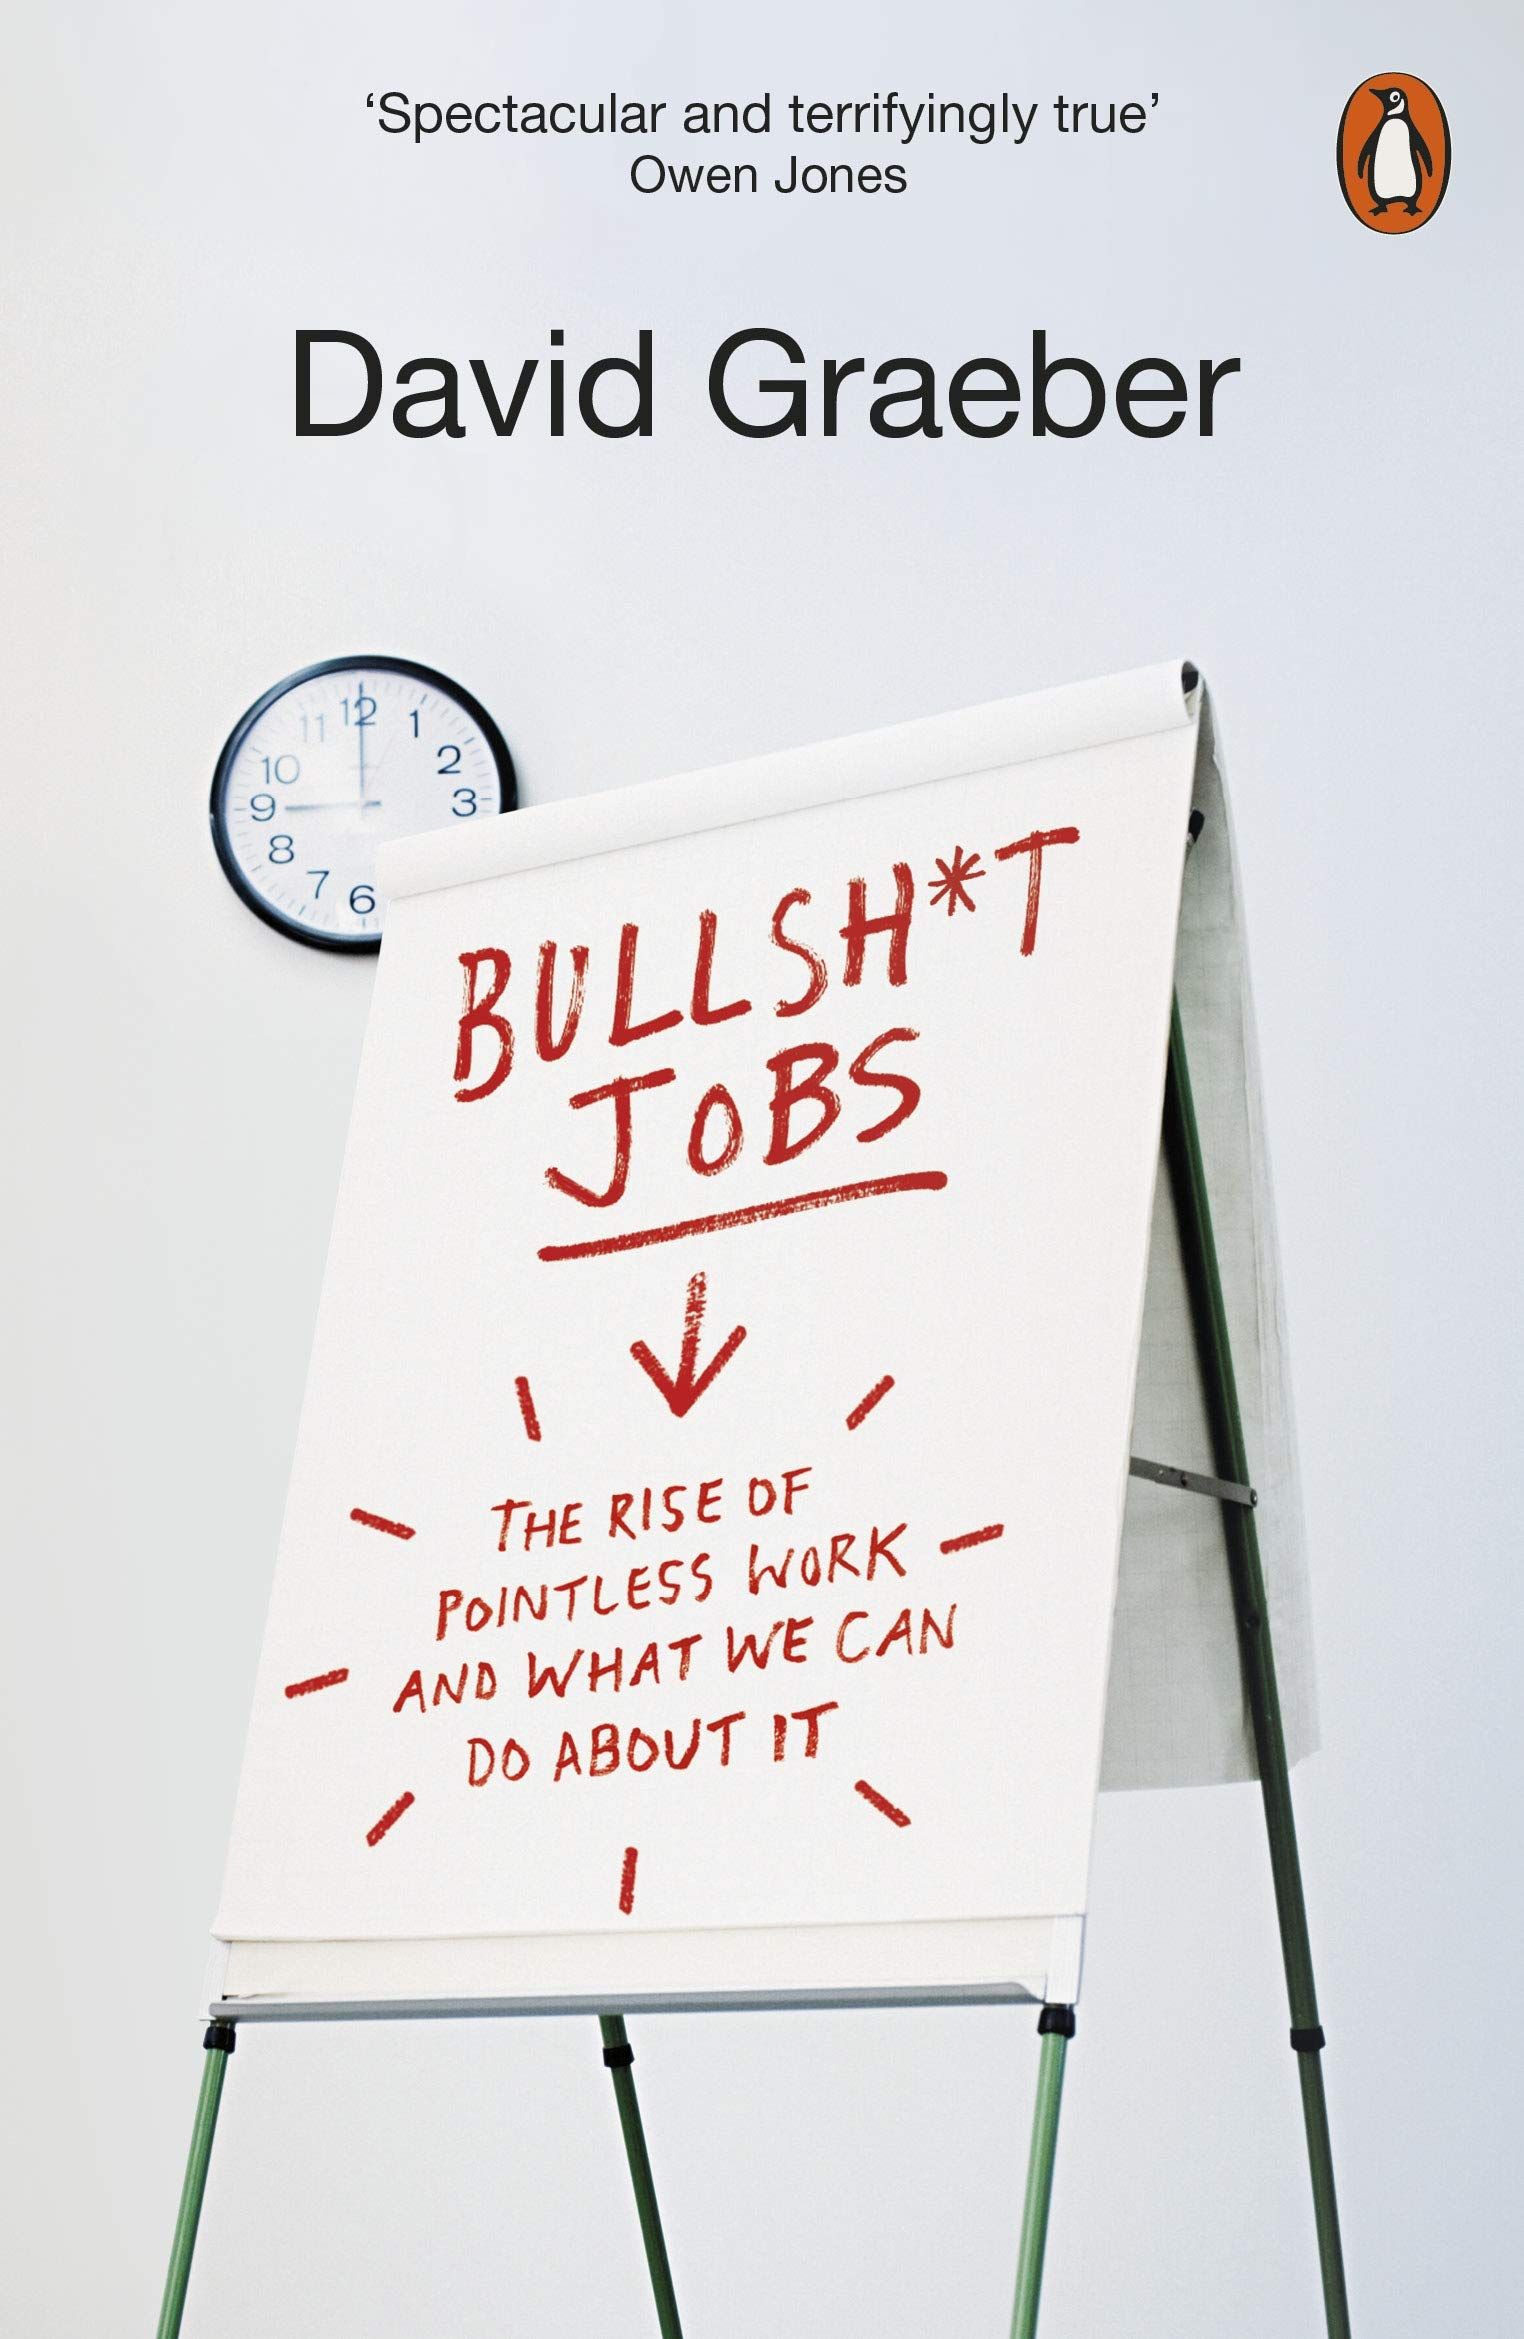 Bullshit Jobs: A theory